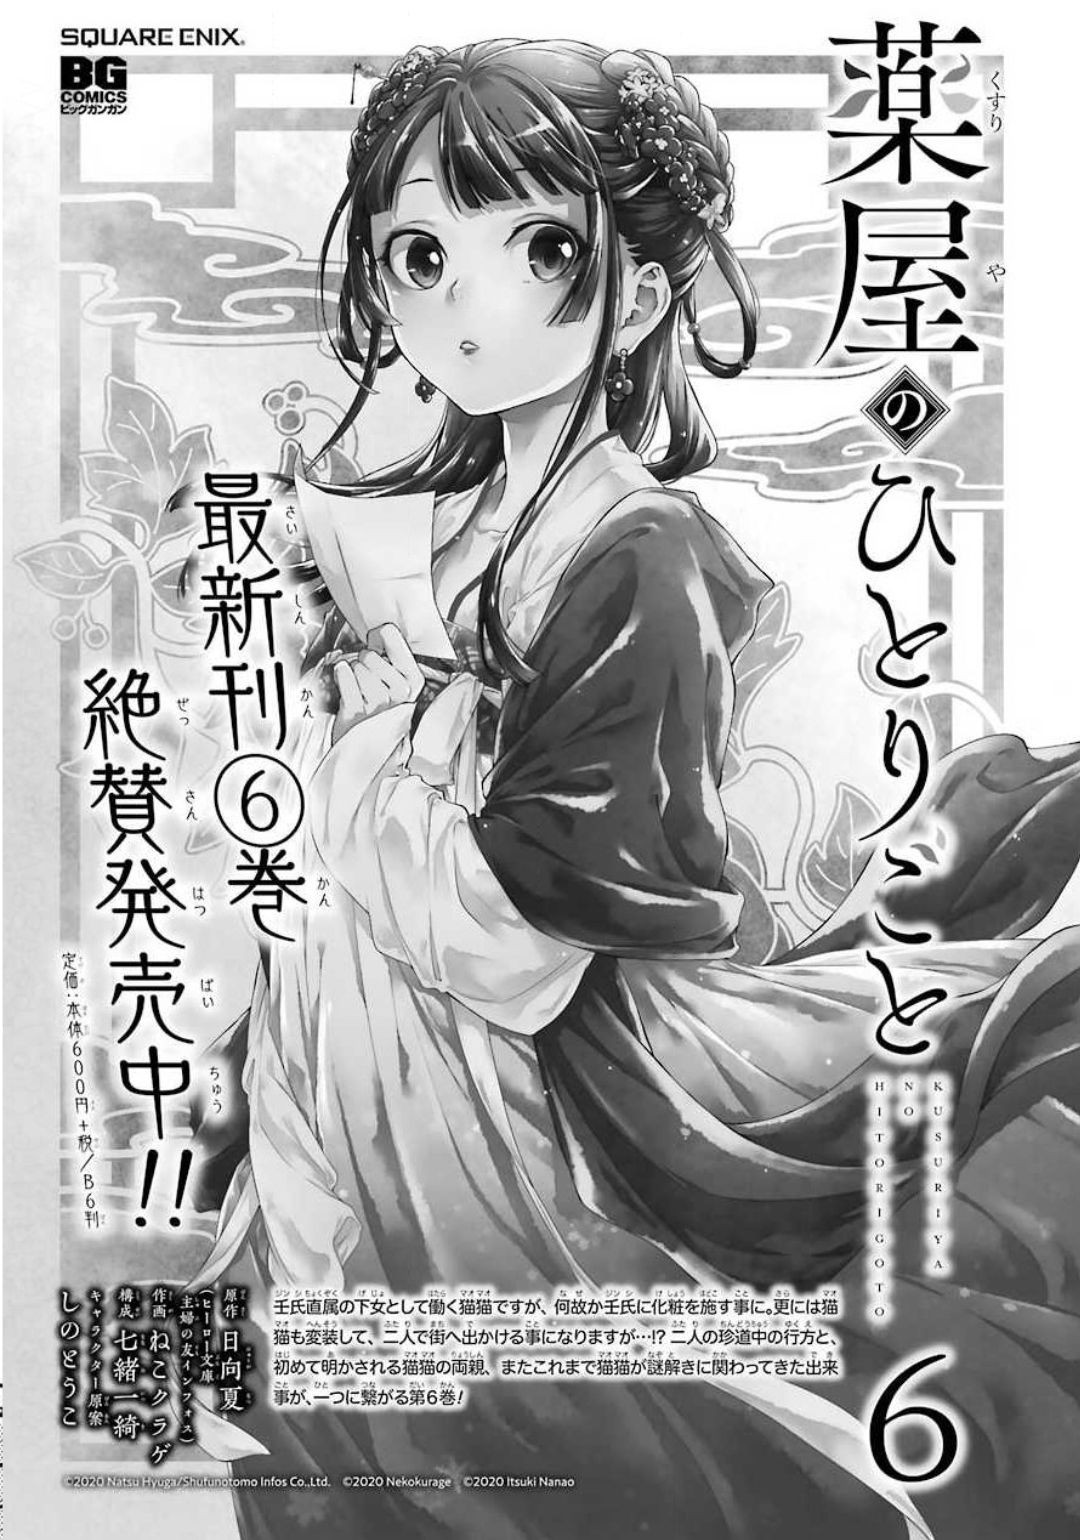 Kusuriya no Hitorigoto - Chapter 35-1 - Page 1